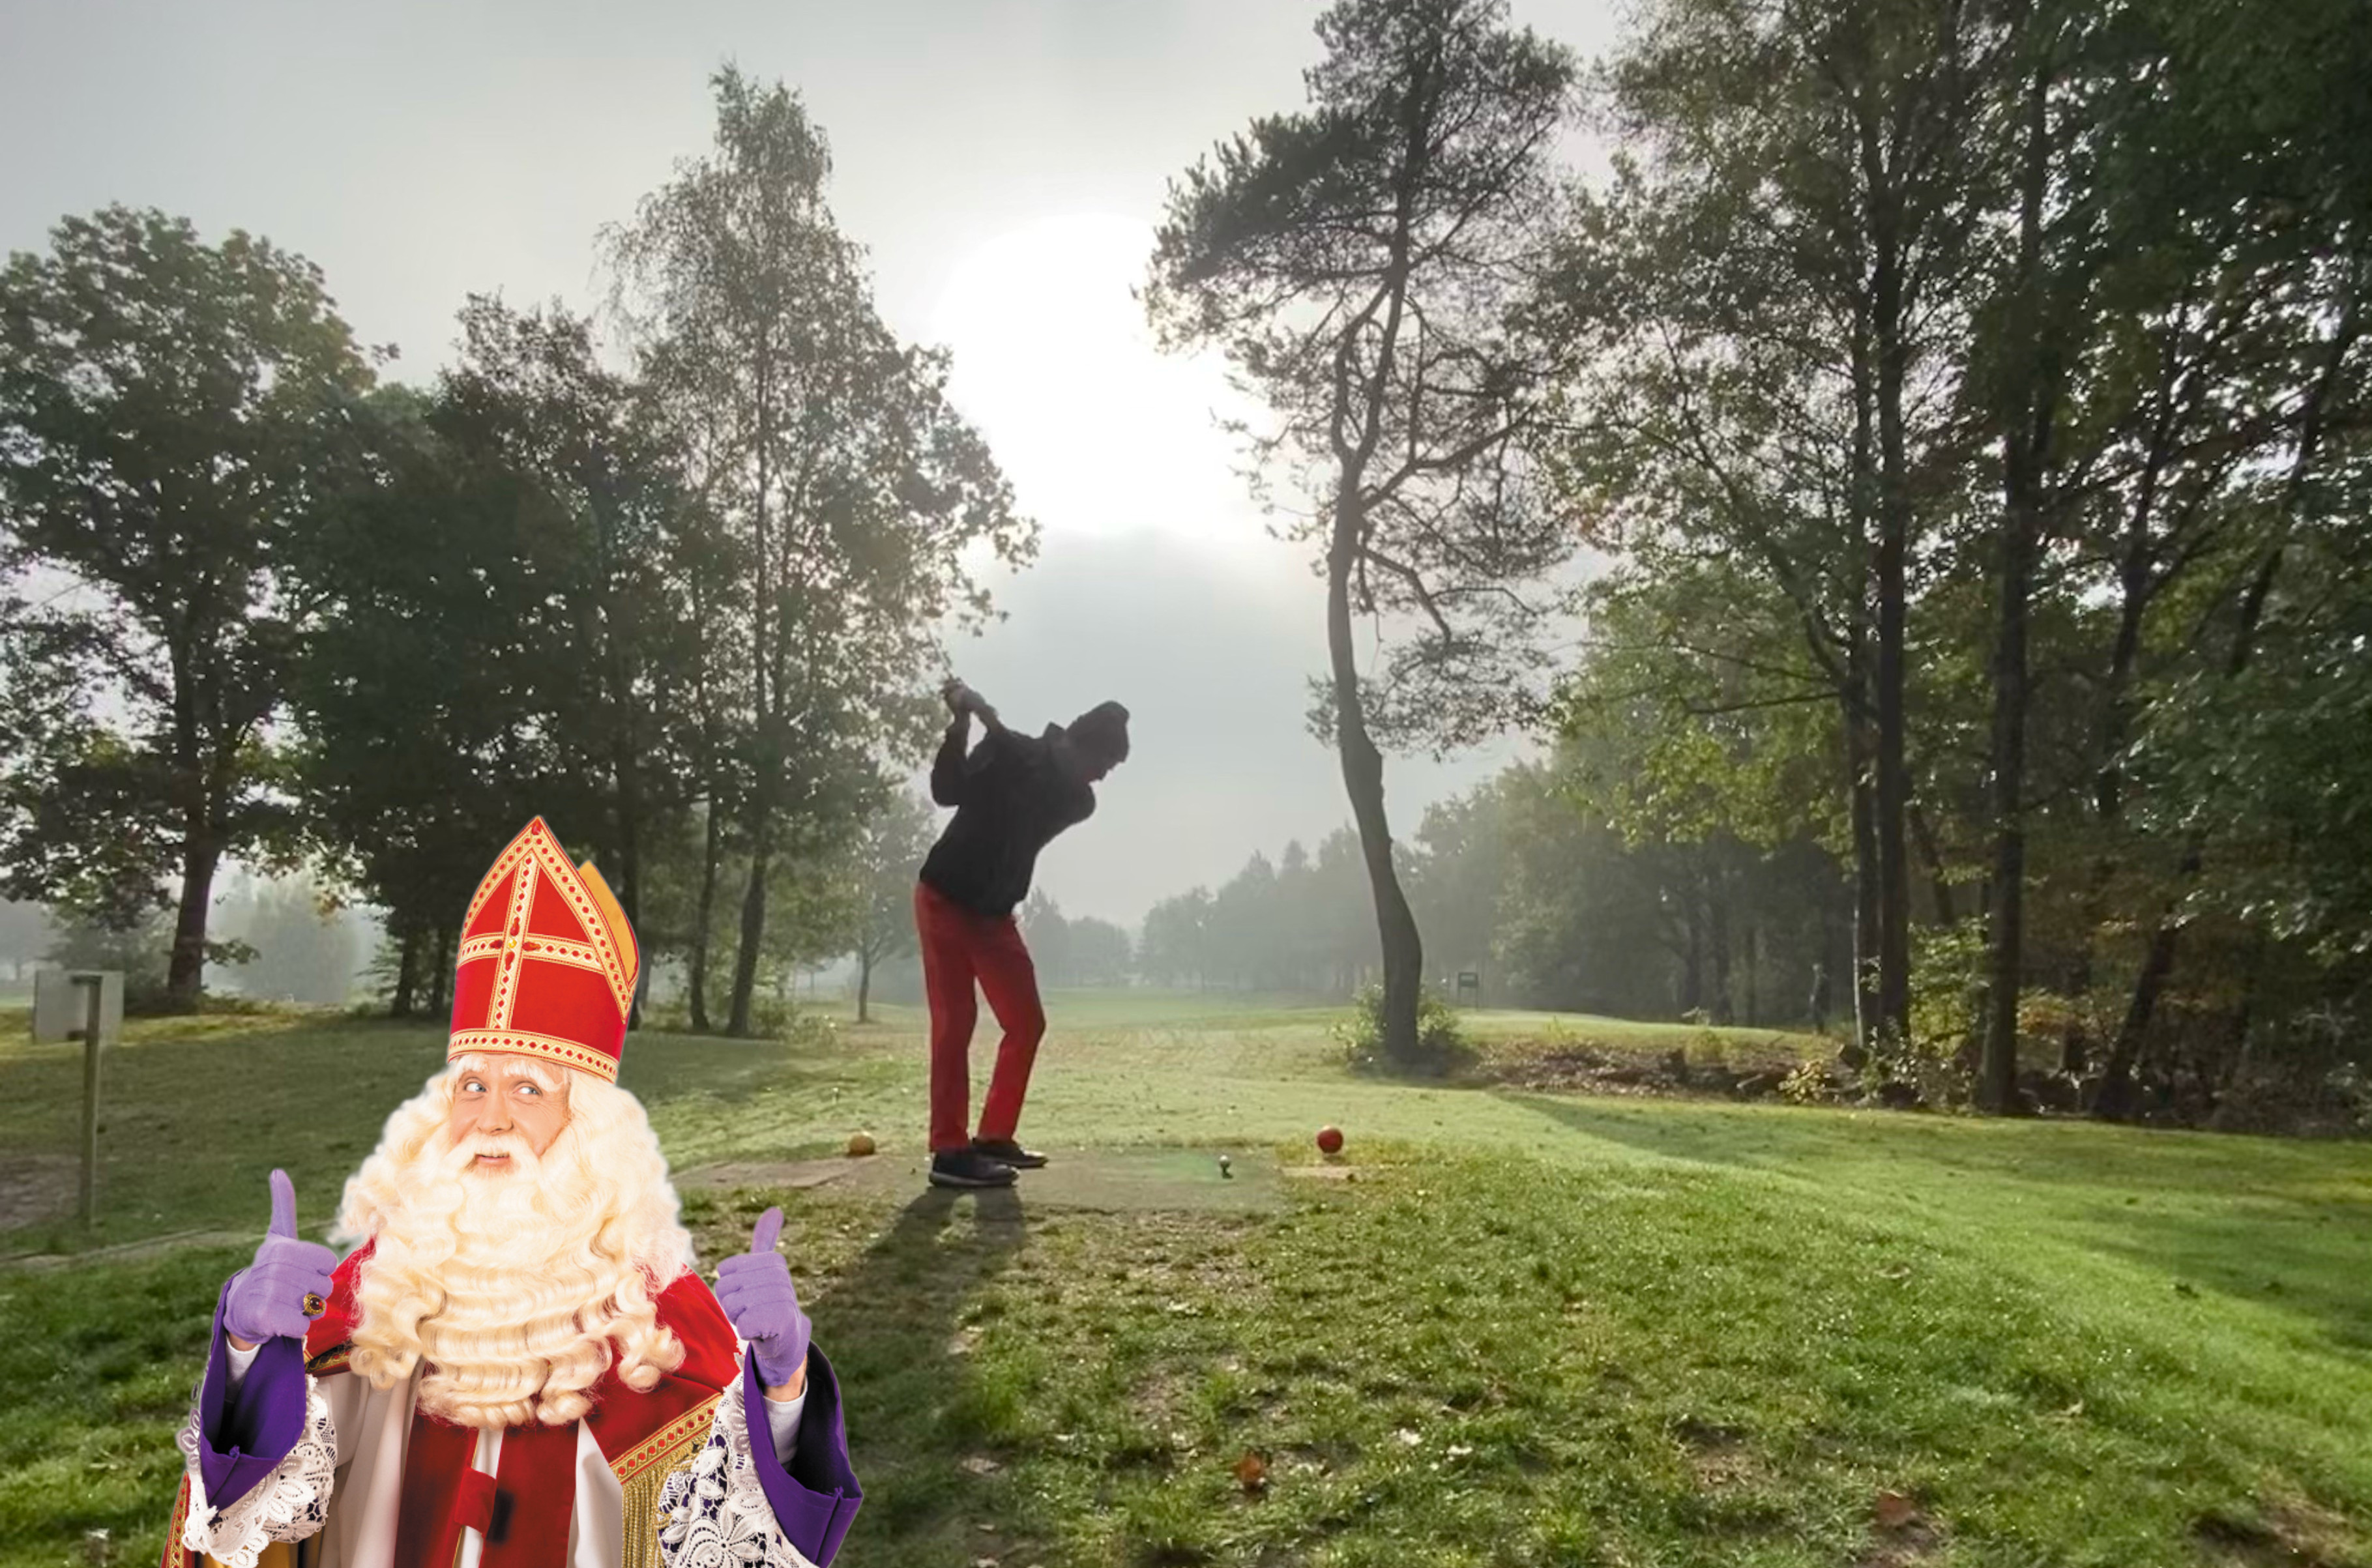 Fjord Soepel Neuken Gedichten voor golfers • Golf.nl